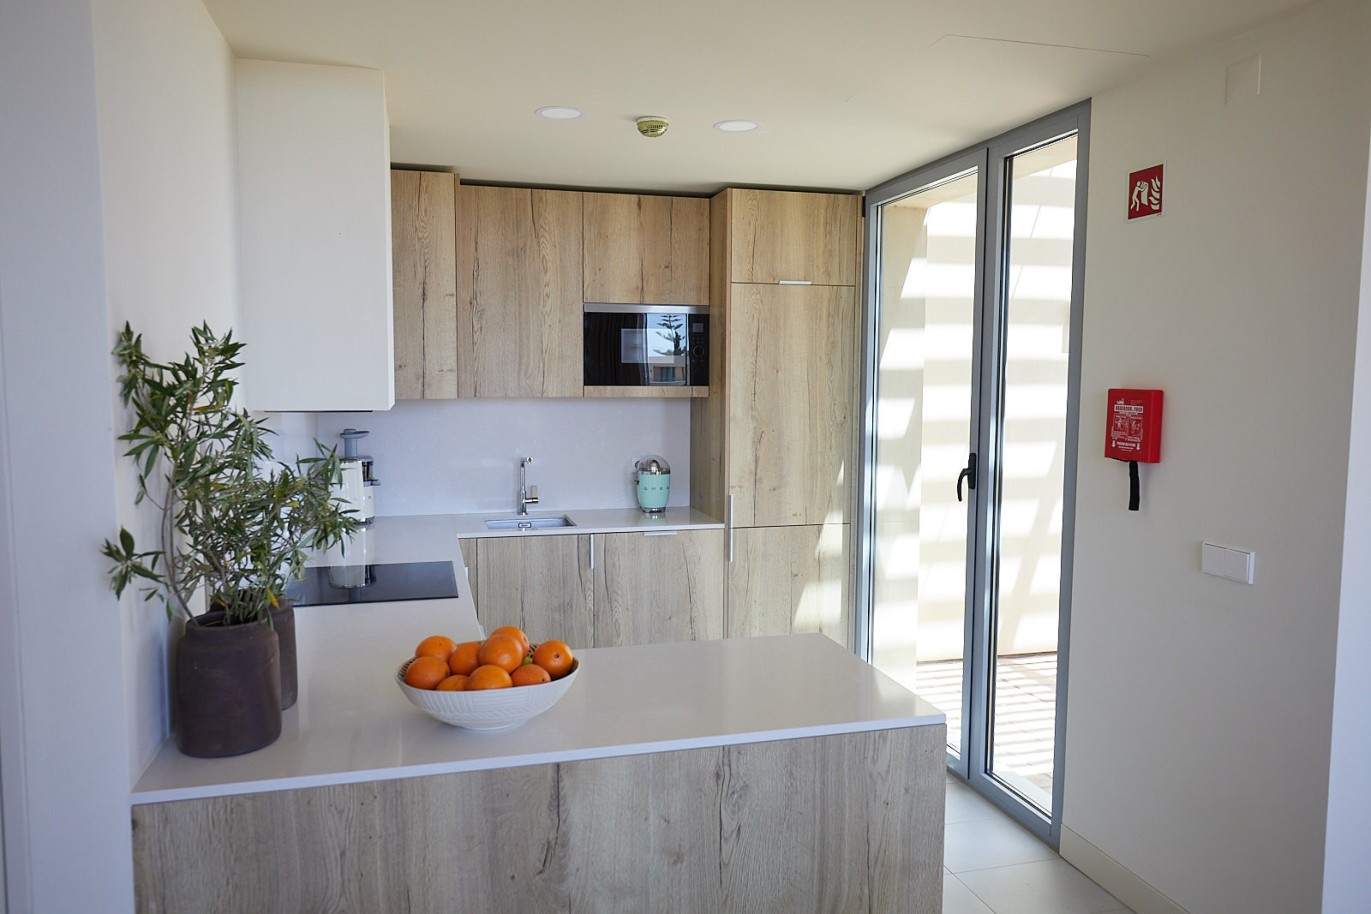 2 bedroom apartment in resort, for sale in Porches, Algarve_228900